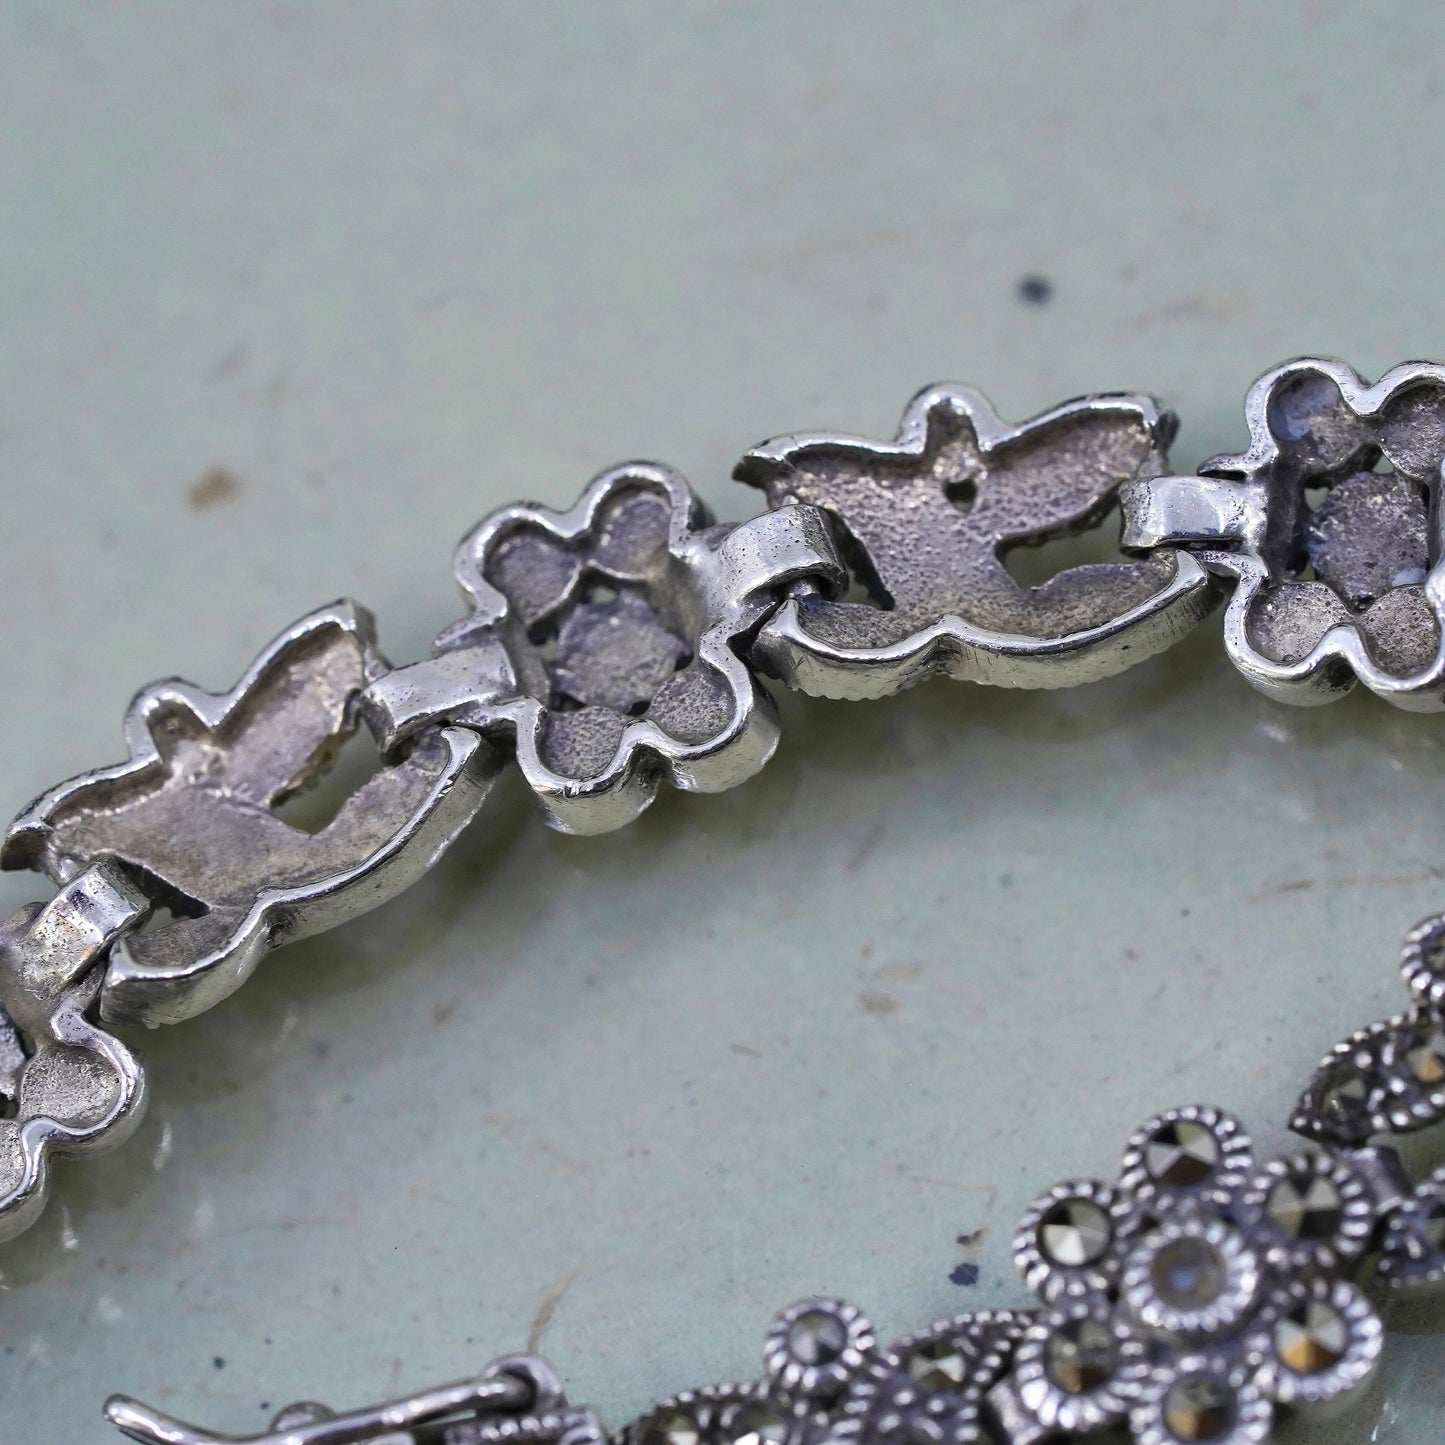 7”, vintage Sterling 925 Silver Handmade tennis Bracelet with marcasite flowers